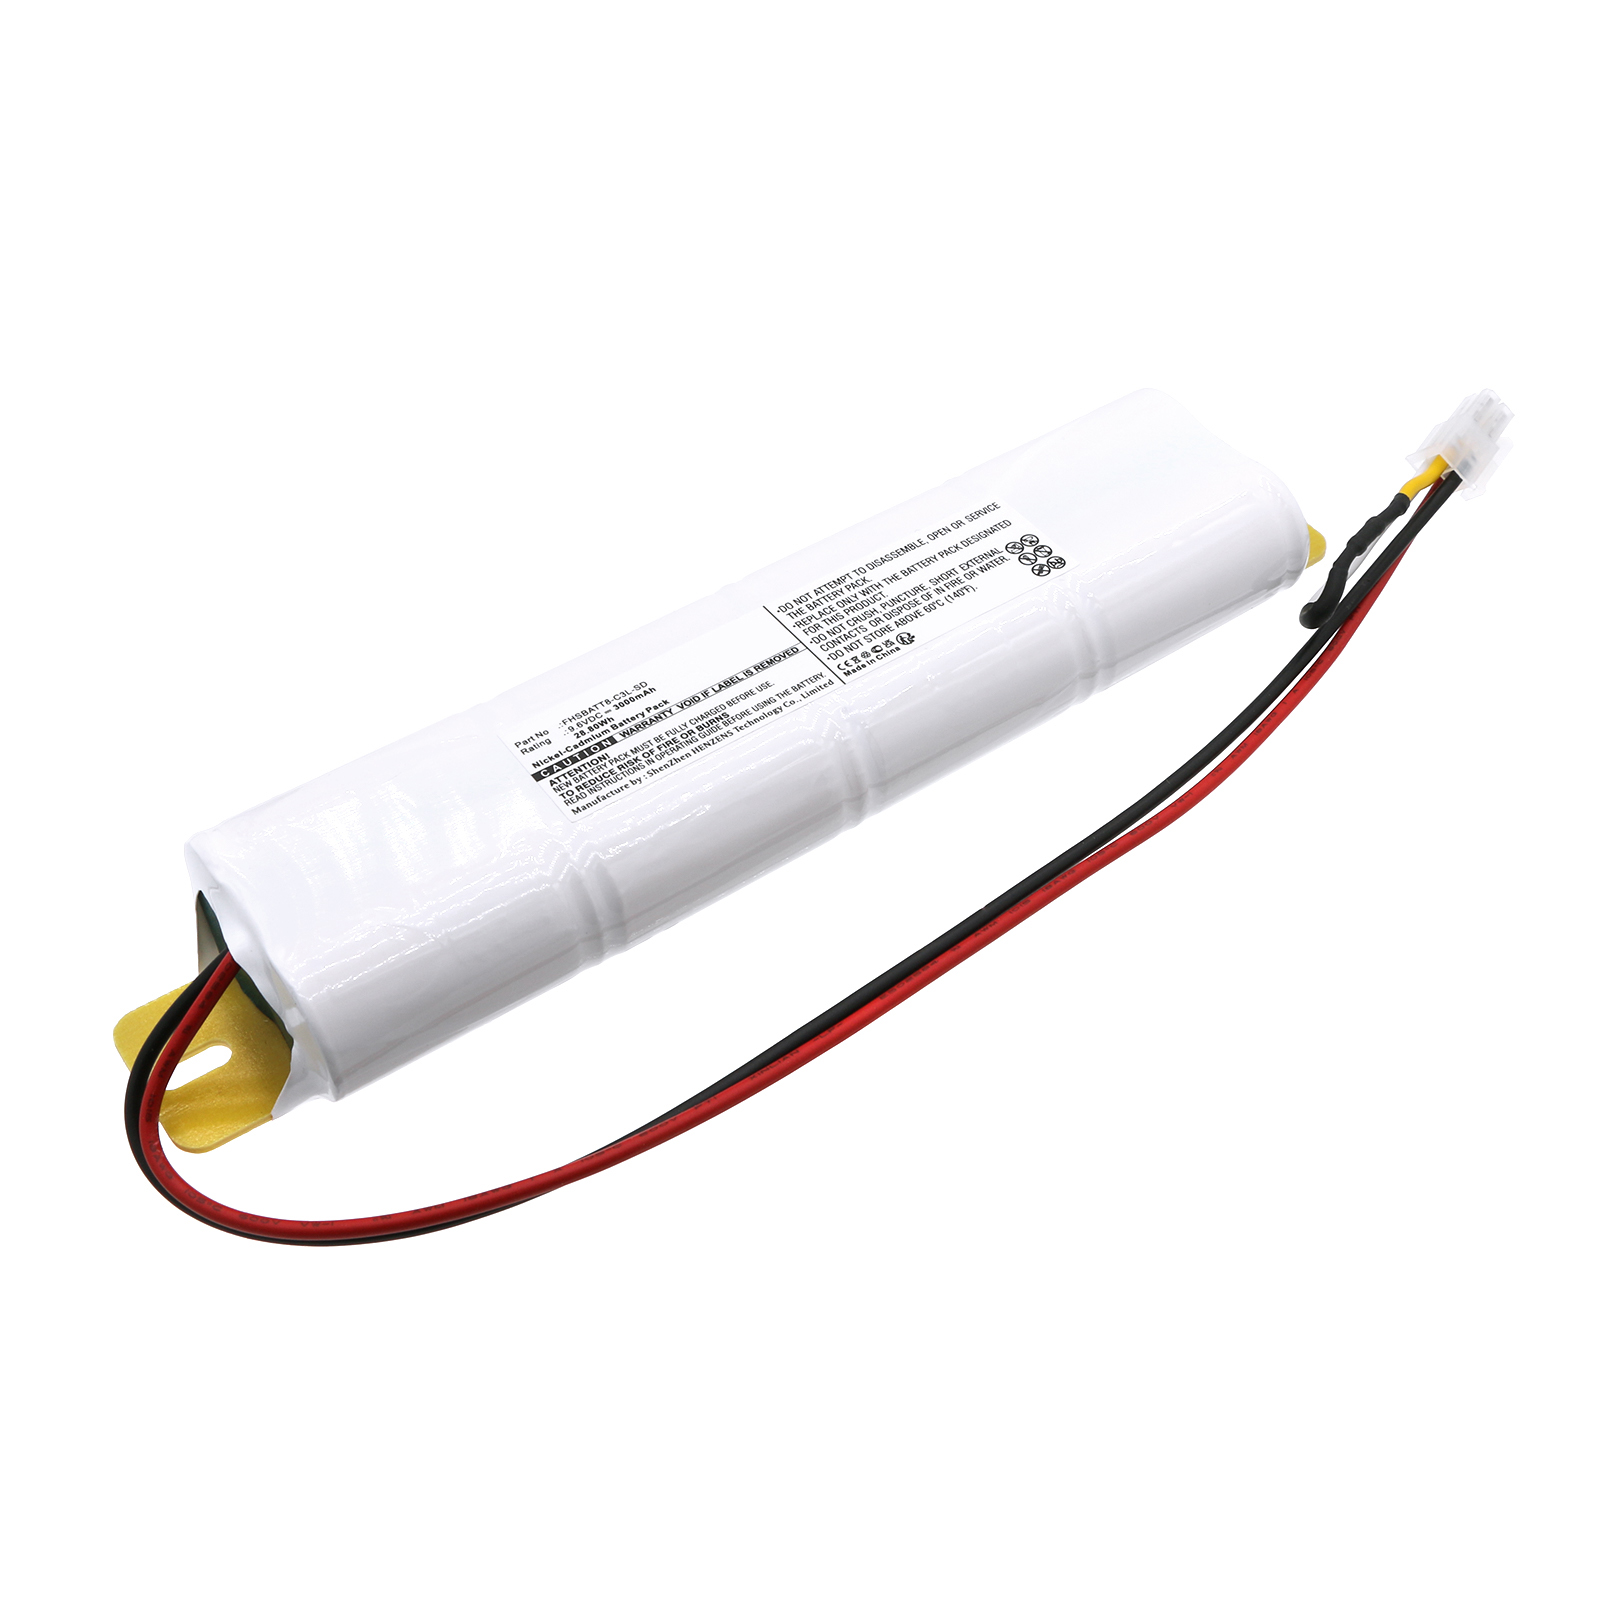 Synergy Digital Emergency Lighting Battery, Compatible with Fullham FHSBATT8-C3L-SD Emergency Lighting Battery (Ni-CD, 9.6V, 3000mAh)